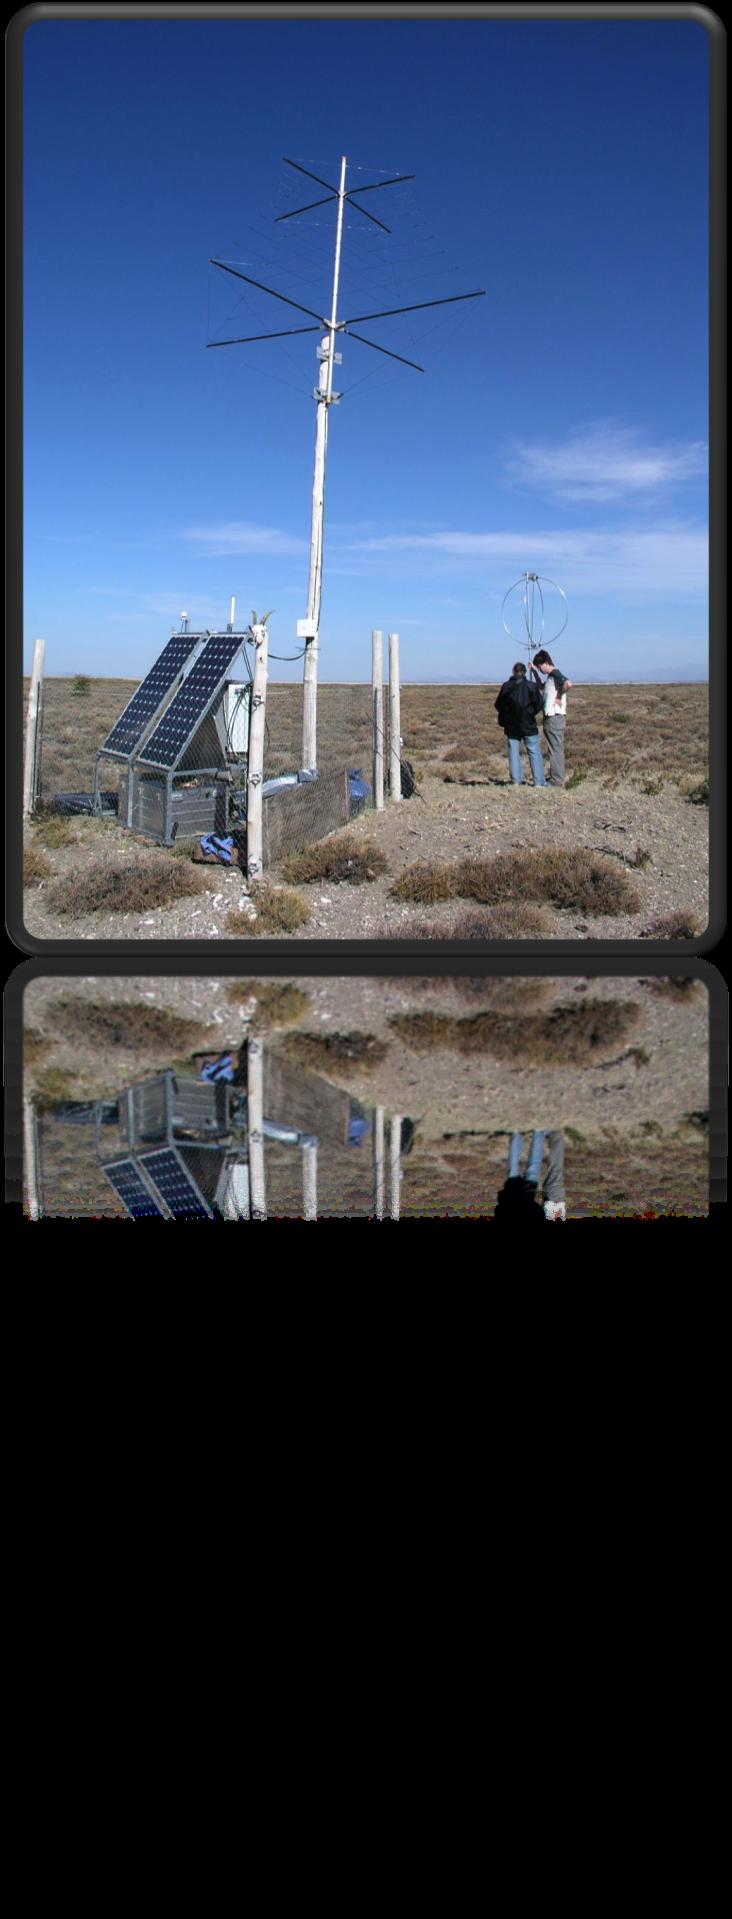 Prototype Station antenna electronics solar panels An air